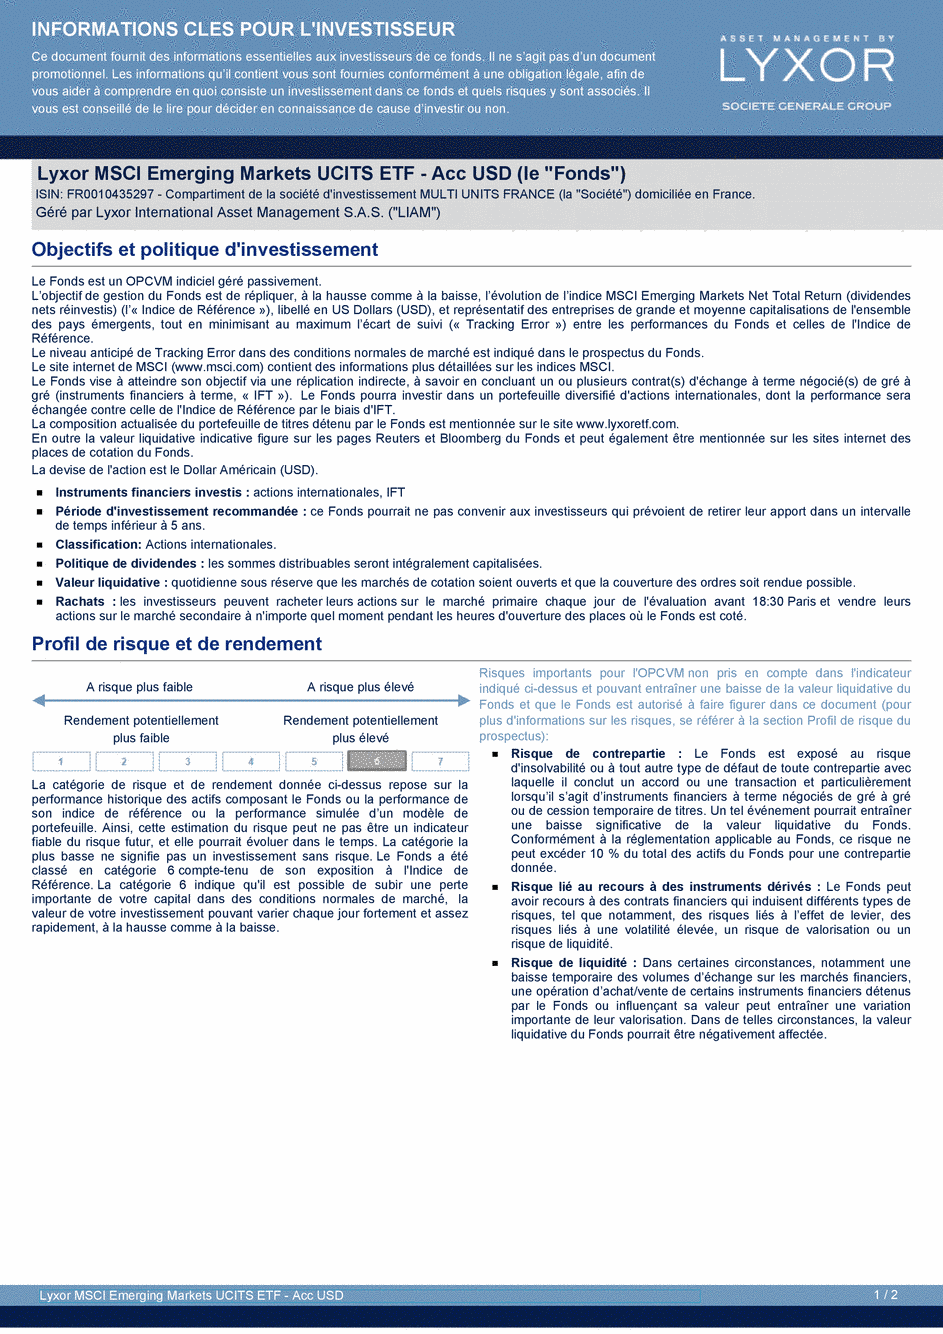 DICI Lyxor MSCI Emerging Markets UCITS ETF - Acc USD - 19/02/2021 - Français